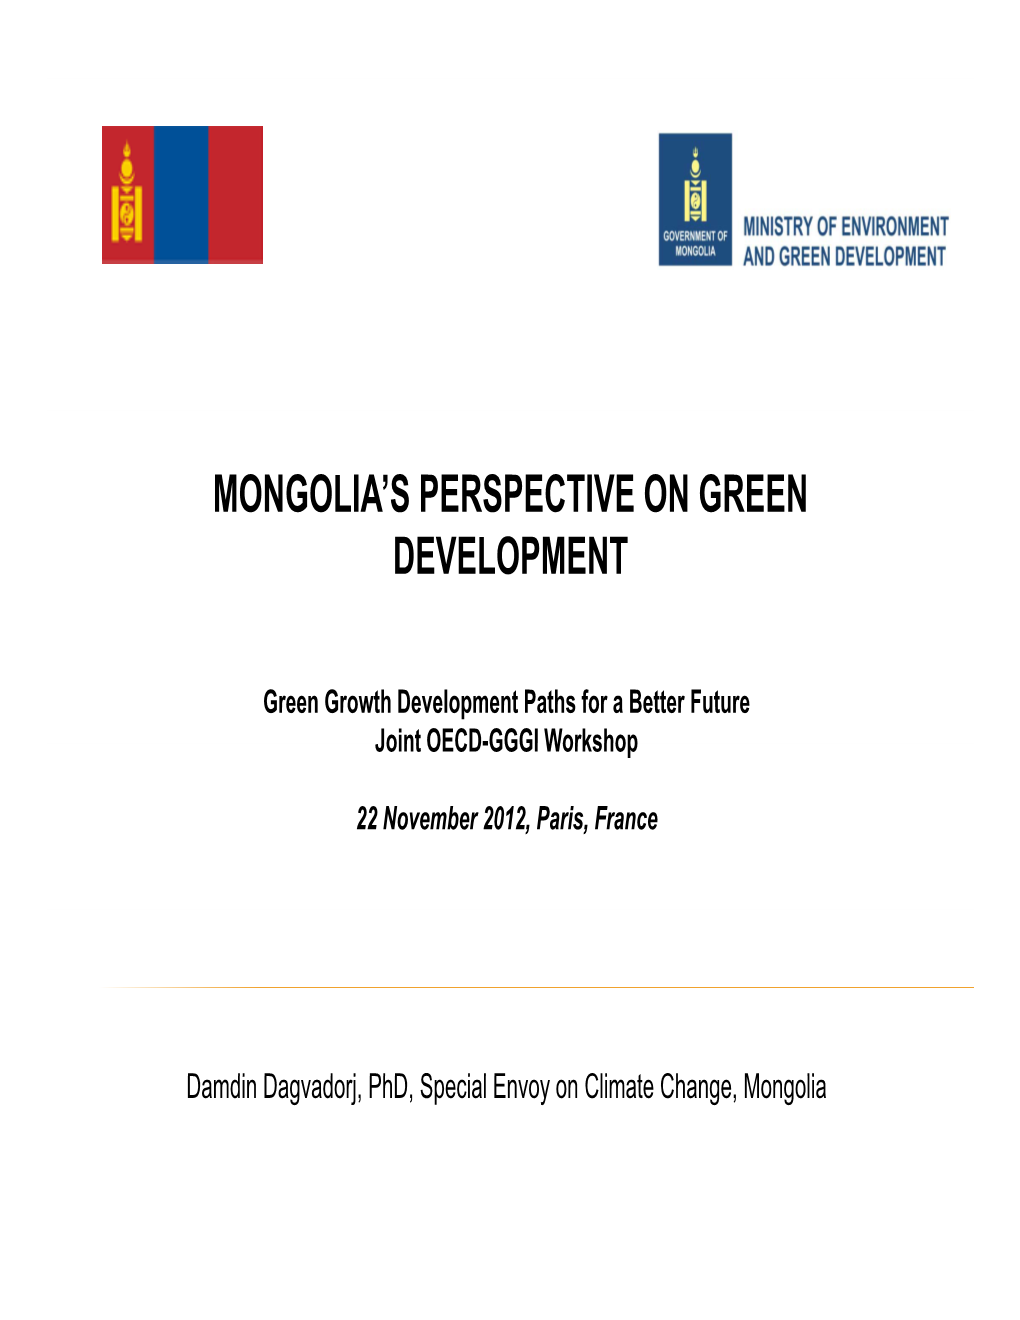 Mongolia's Perspective on Green Development